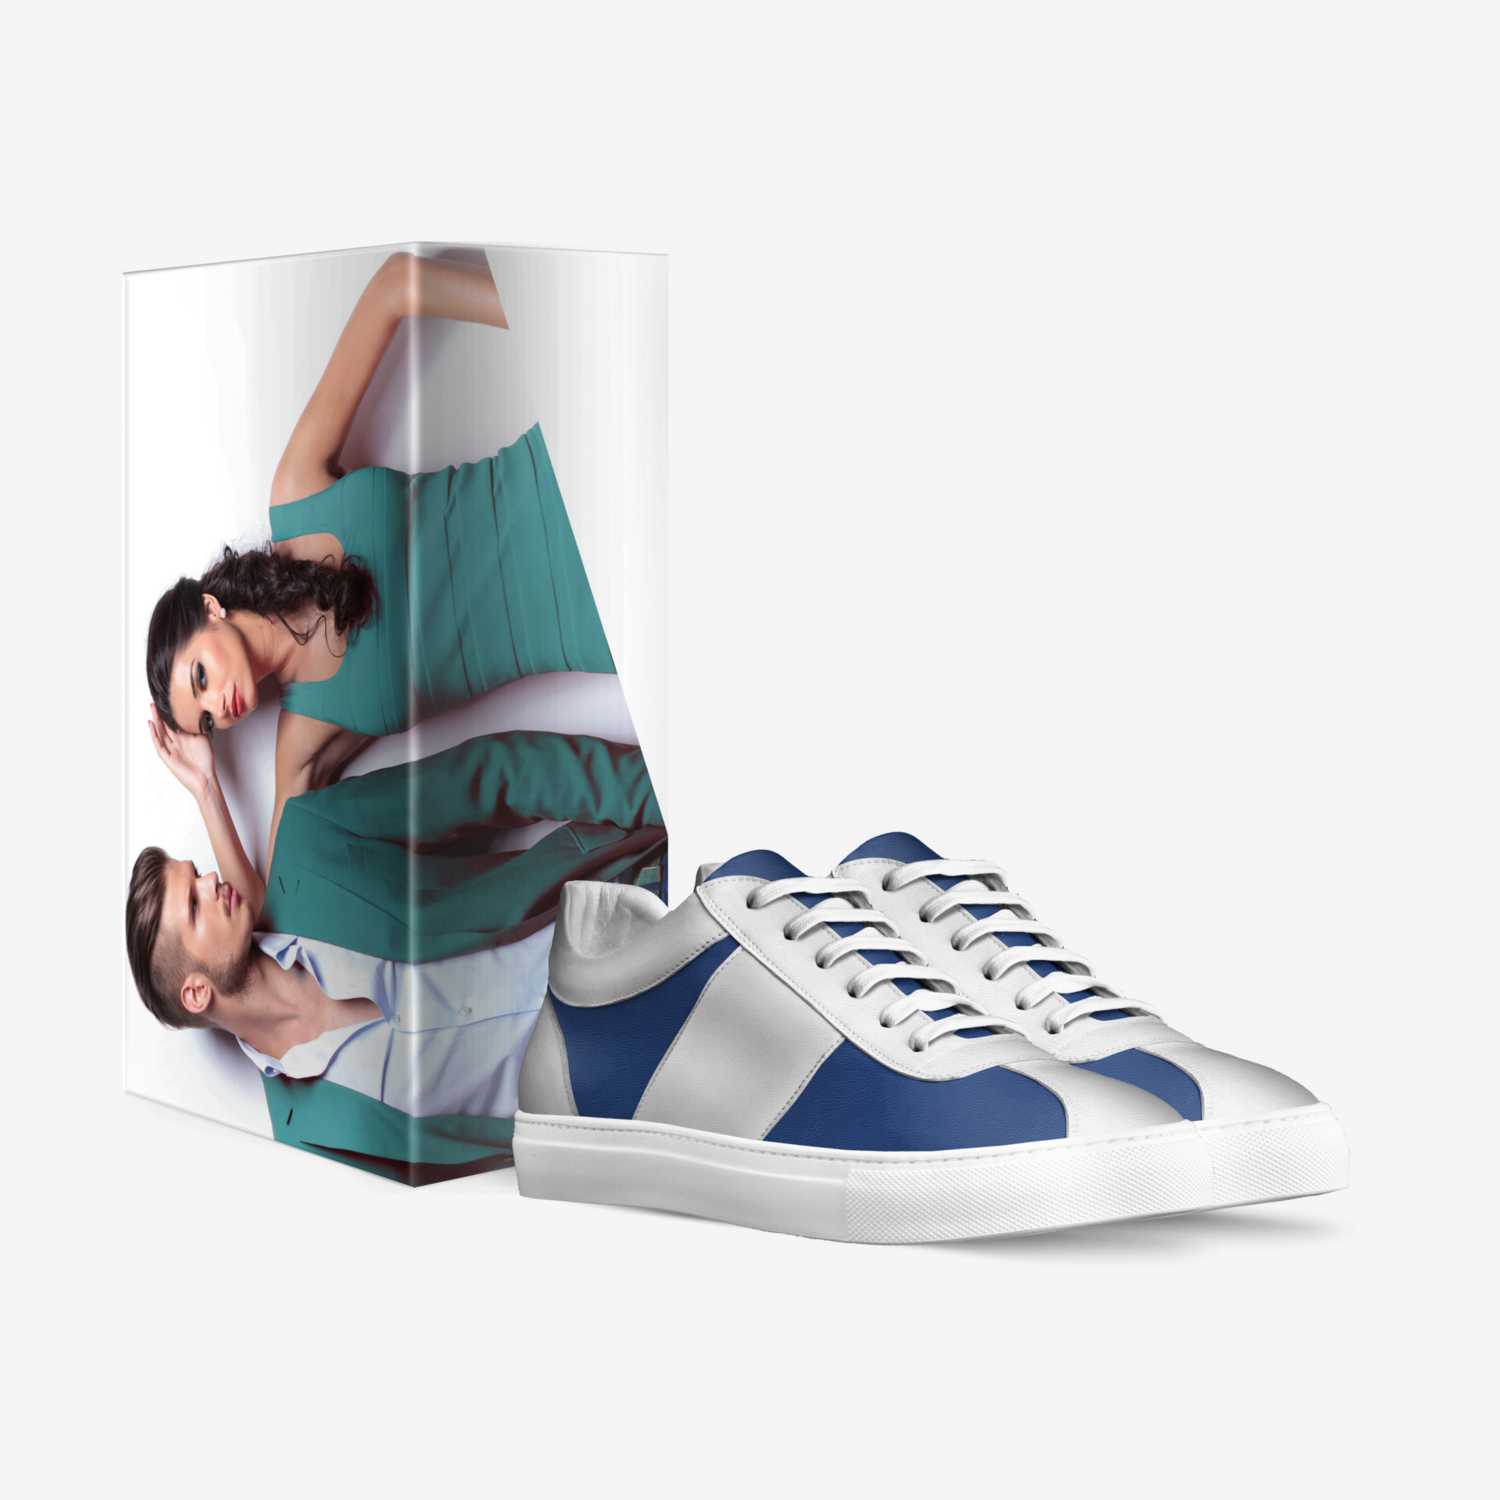 Keshia custom made in Italy shoes by Keshia Sanders-eyerman | Box view